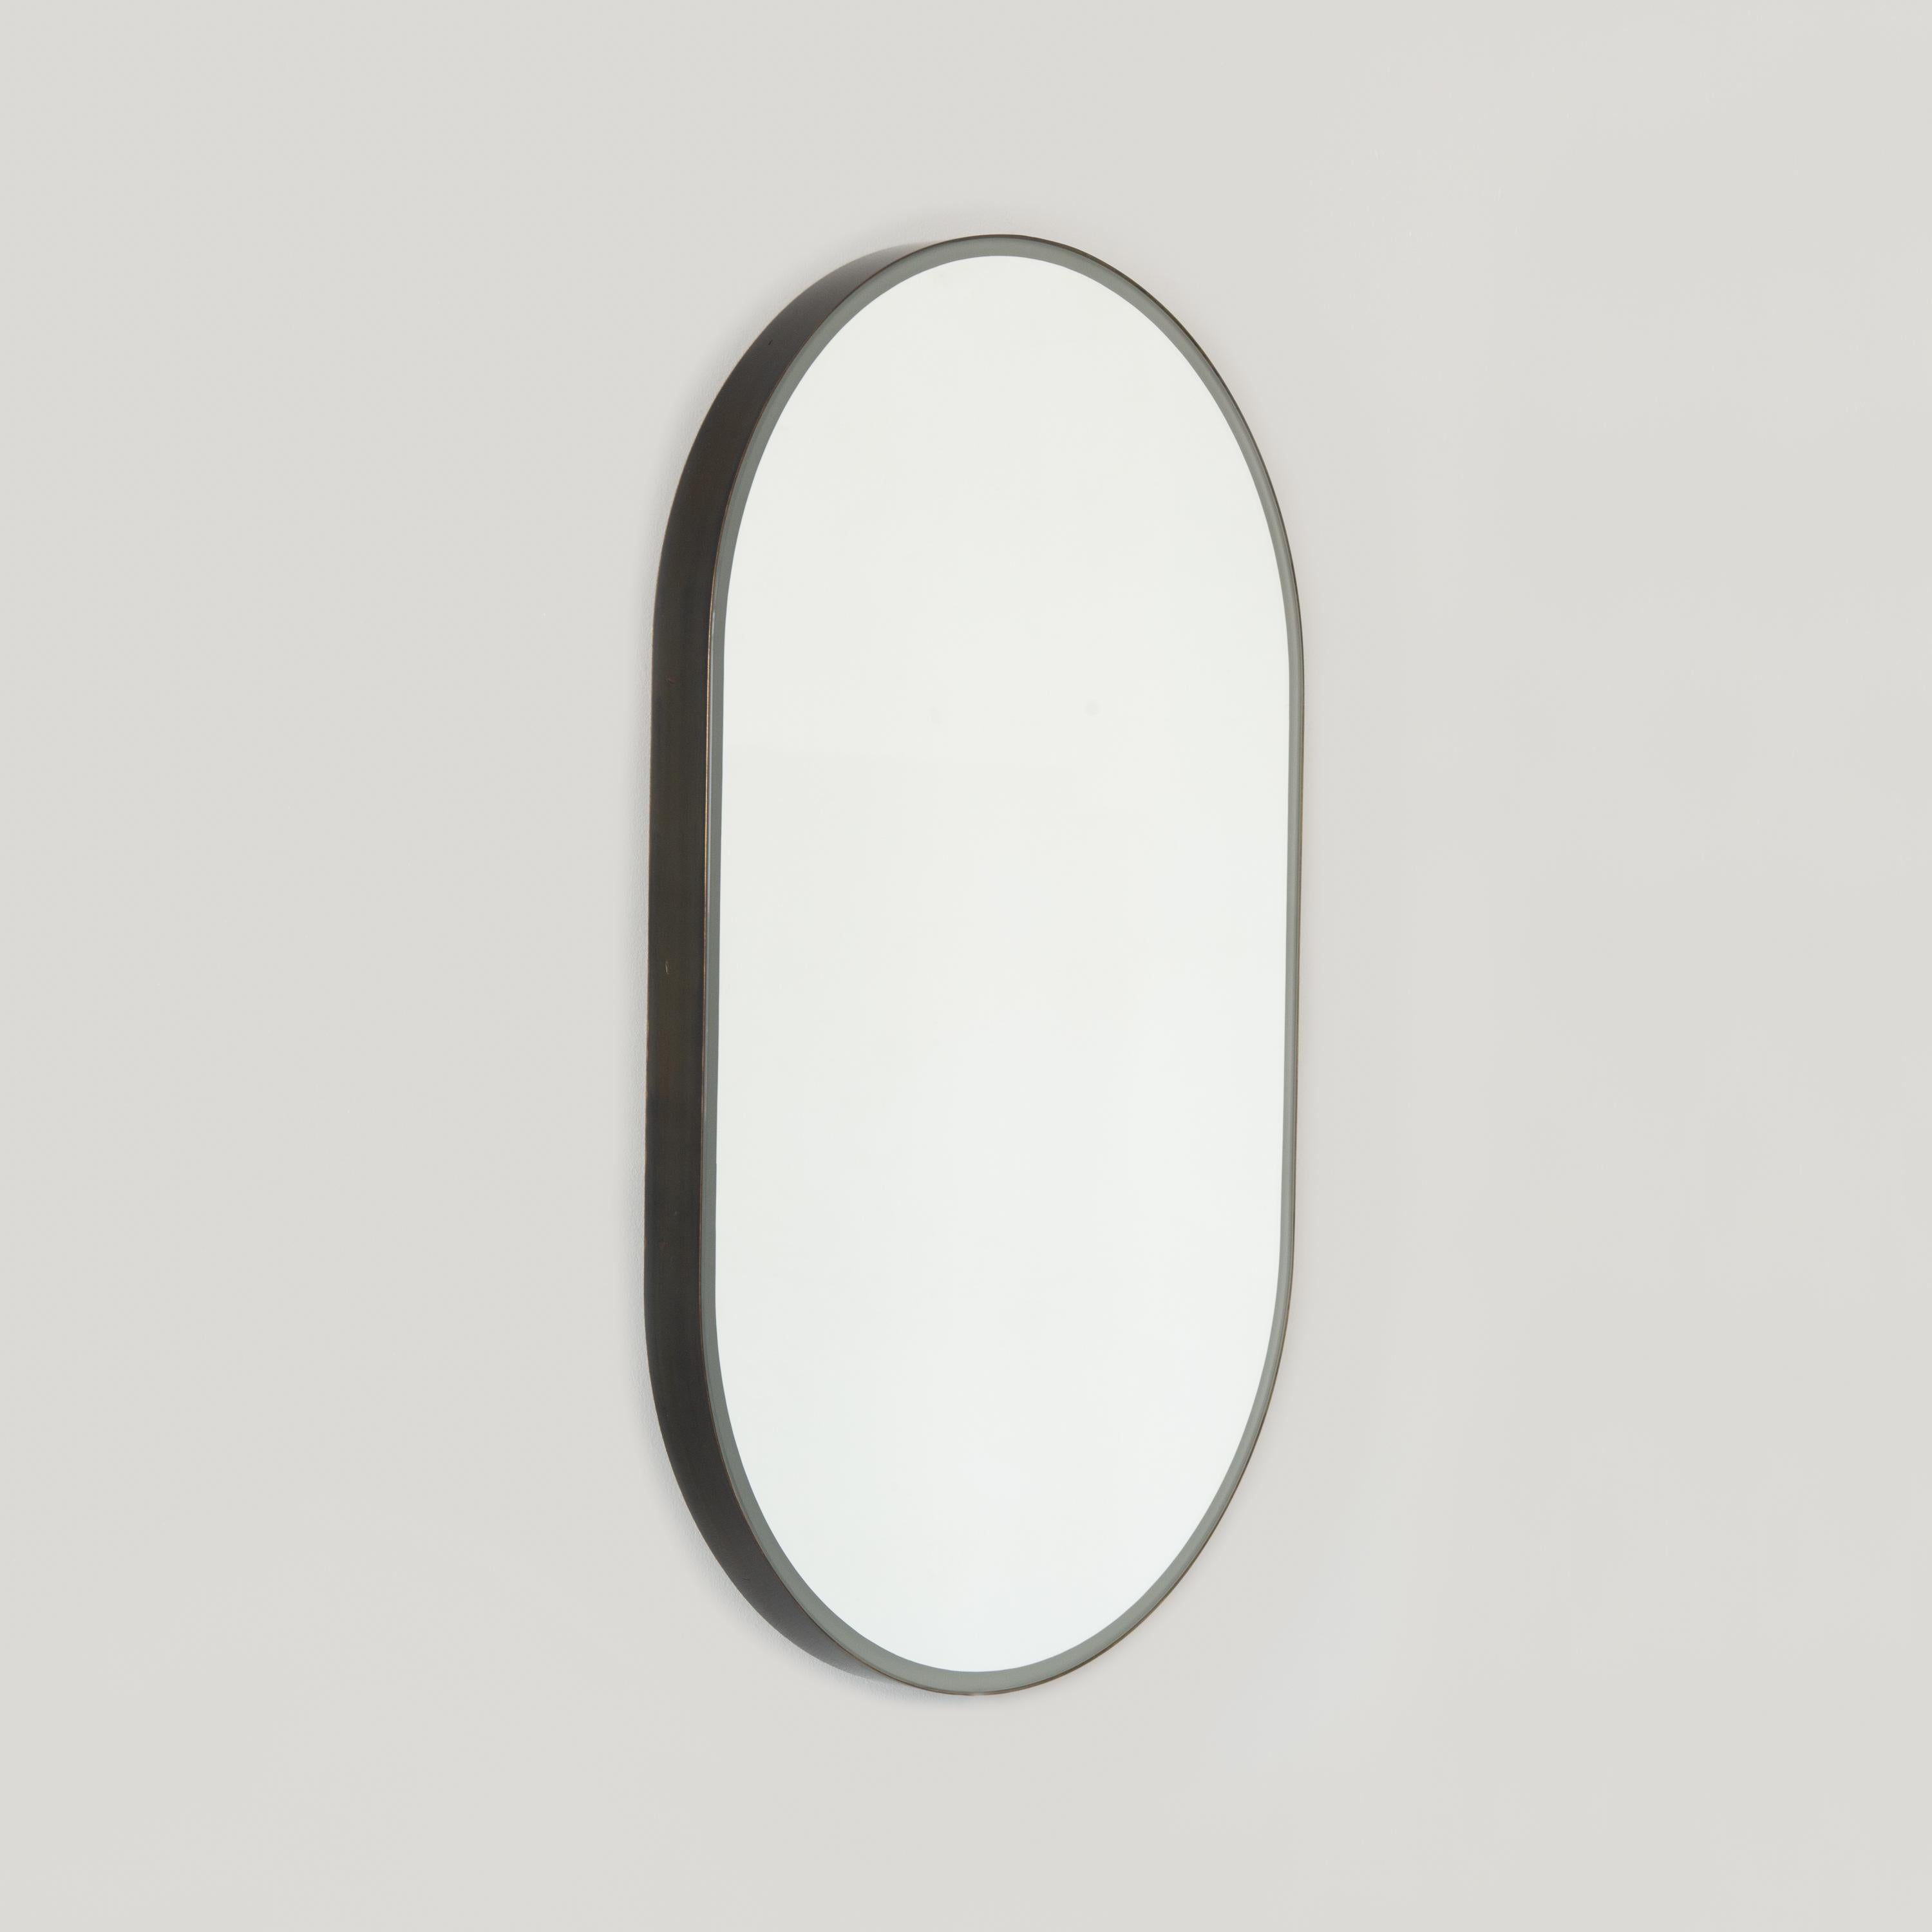 British Capsula Front Illuminated Pill Shaped Mirror, Bronze Patina Frame, XL For Sale